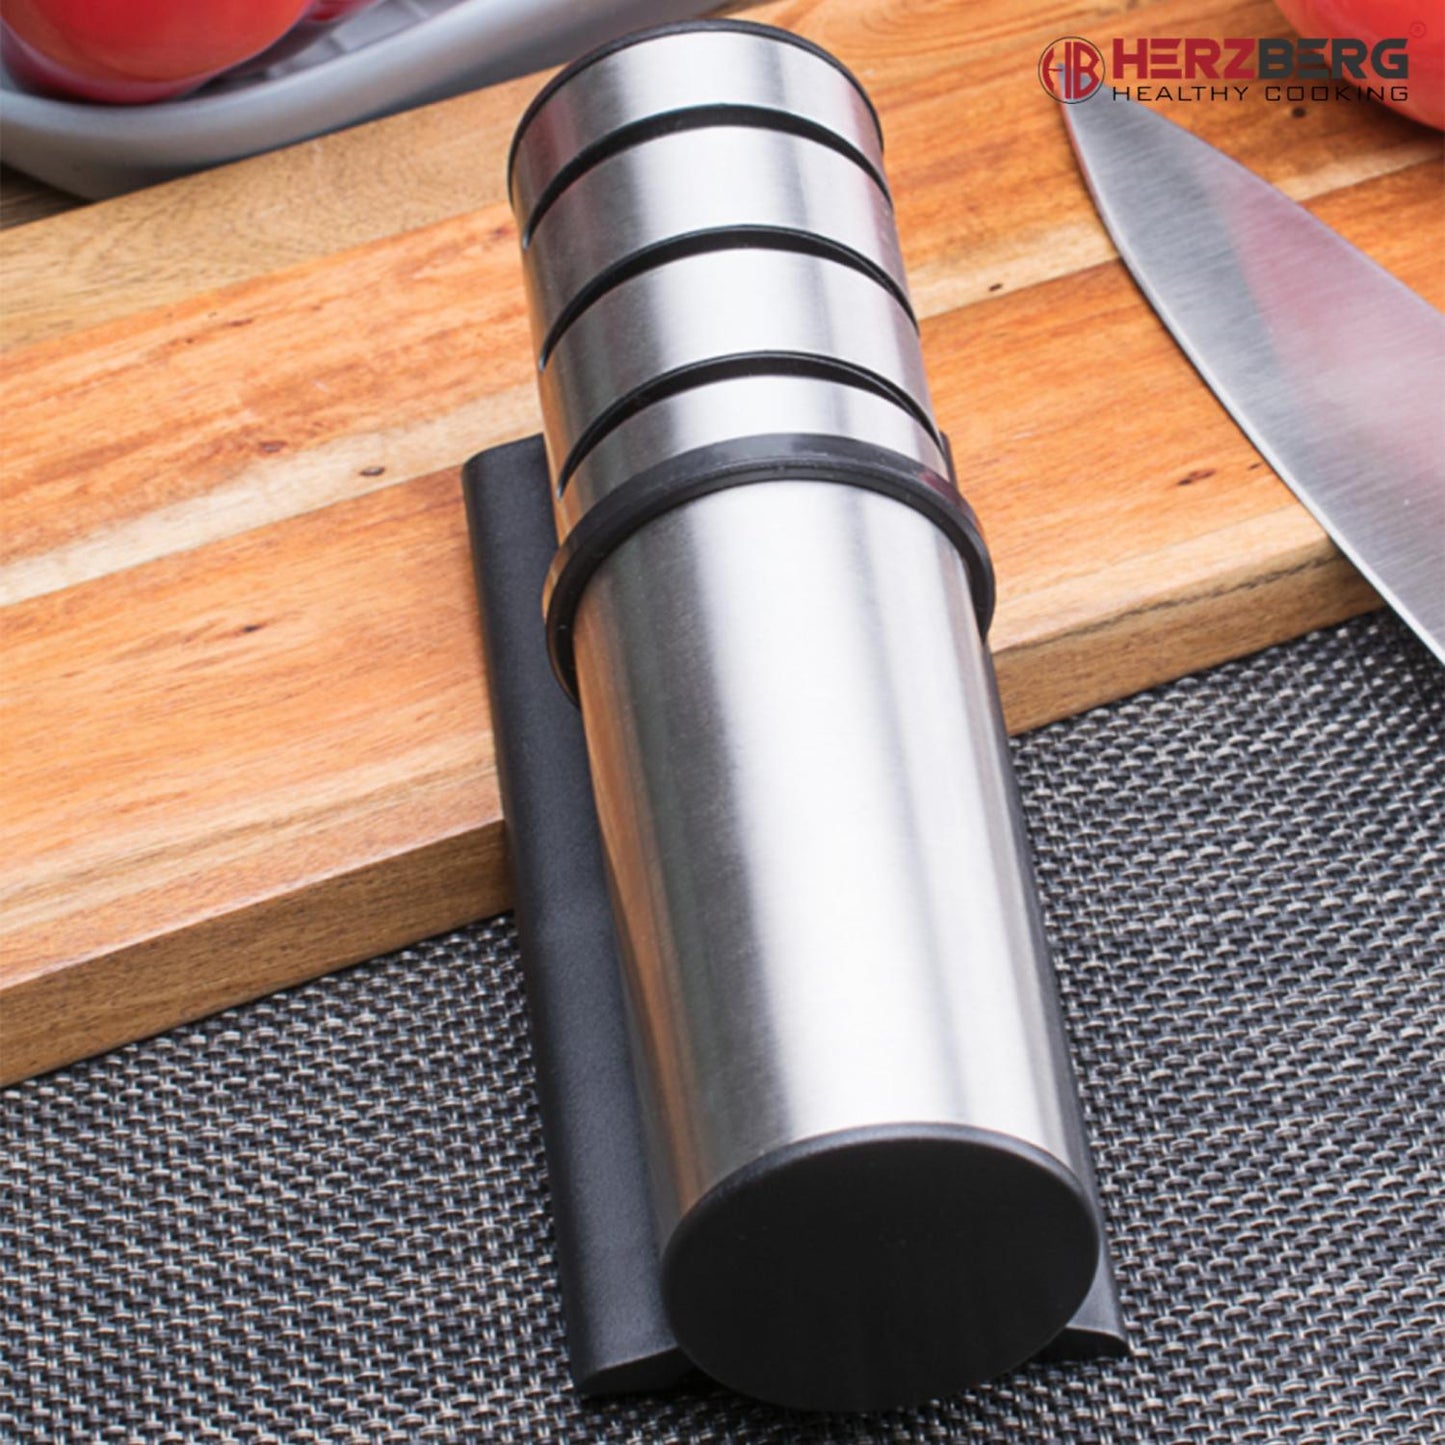 Herzberg Cylinder Stainless Steel Manual Knife sharpener